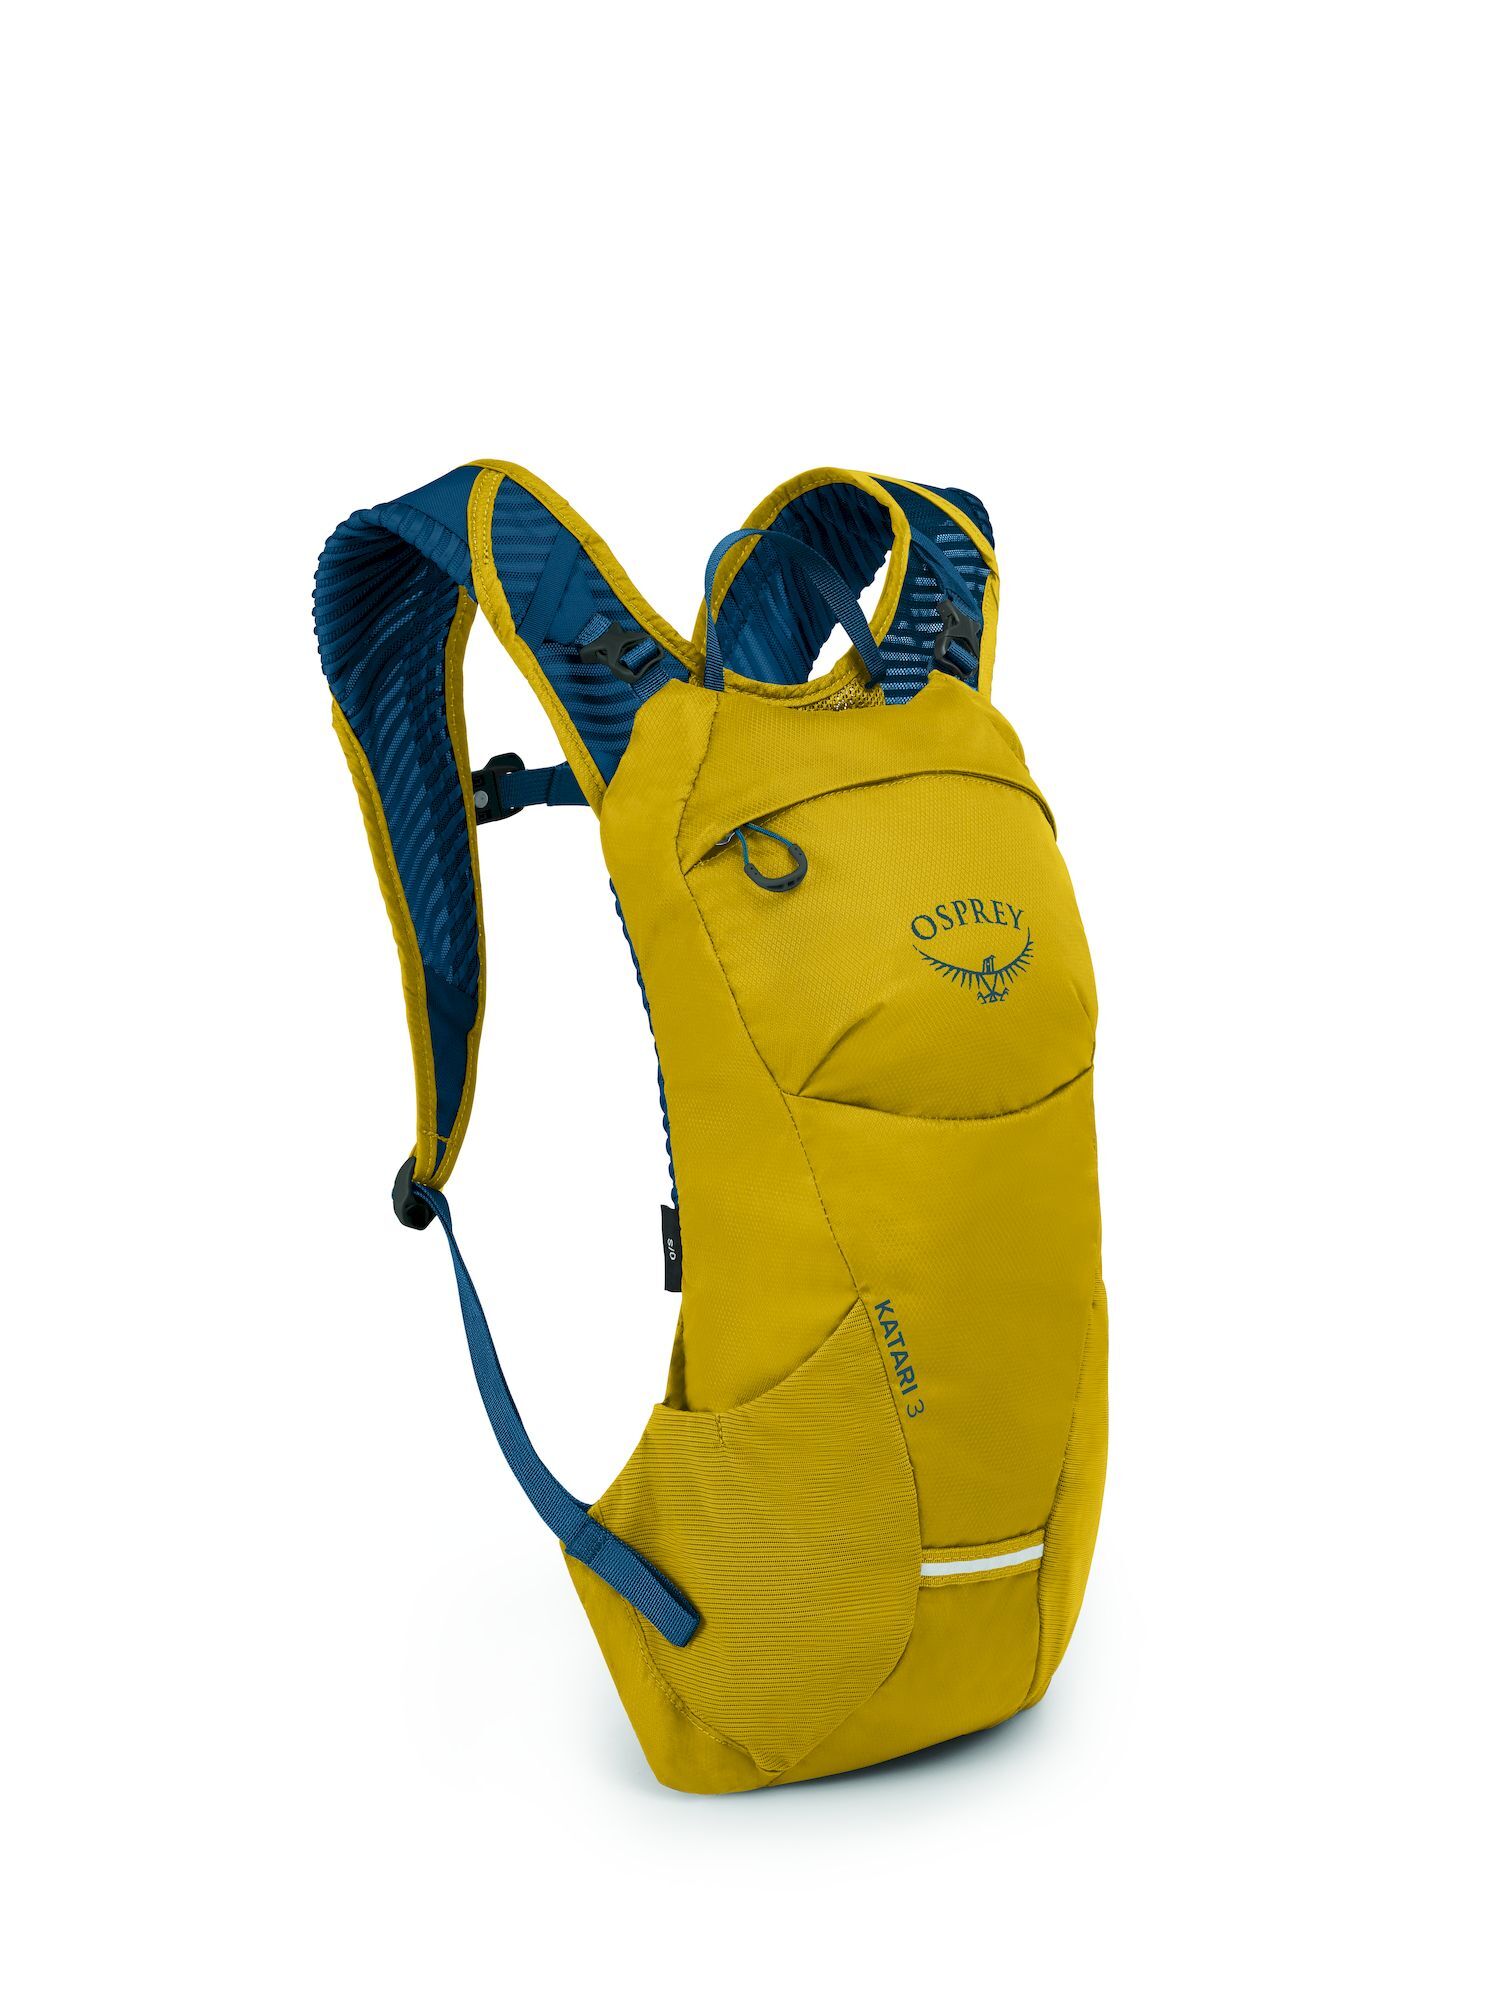 Osprey Katari 3 - Cycling backpack - Men's